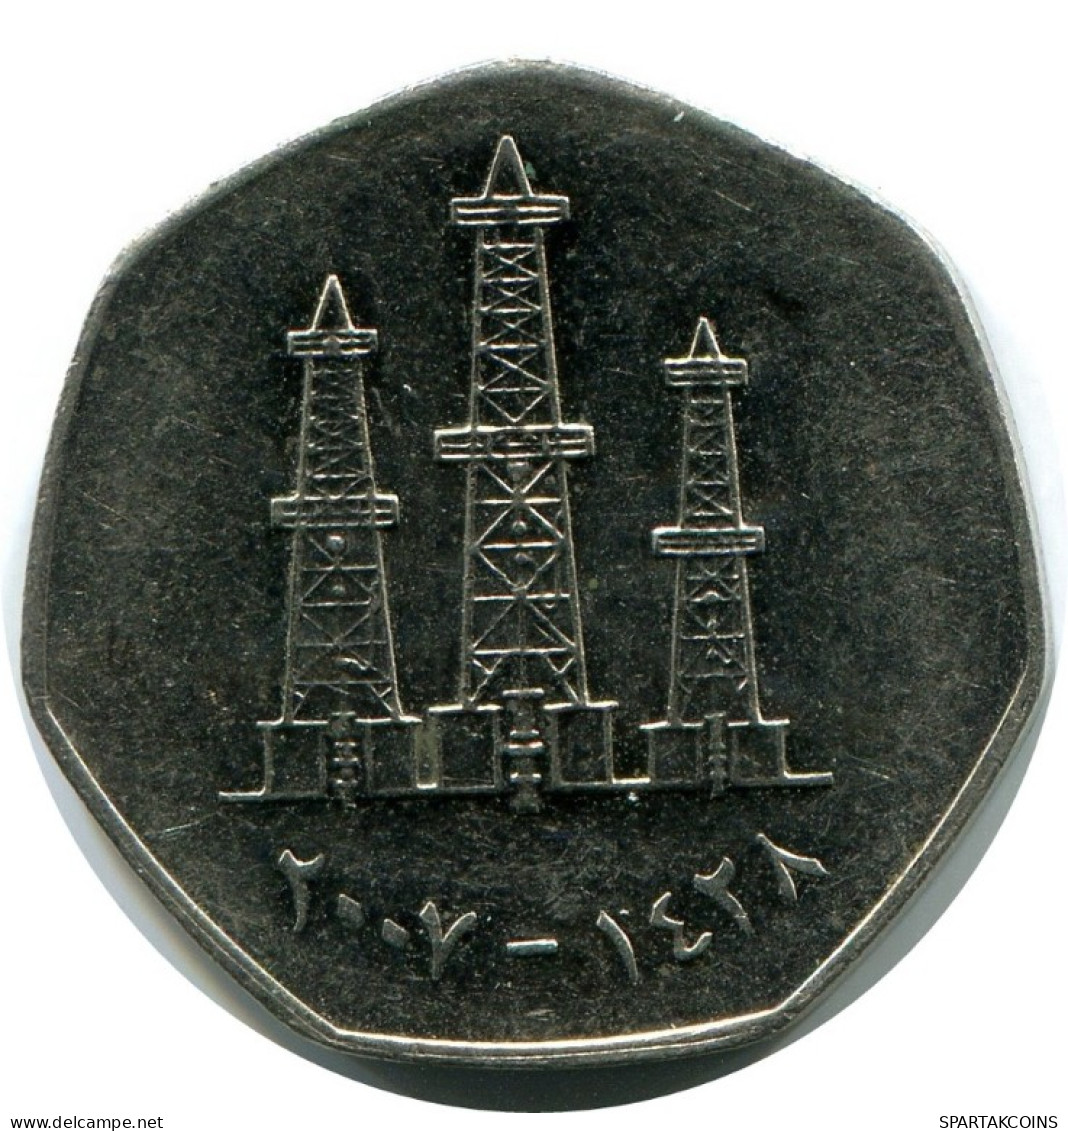 50 FILS 2007 UAE UNITED ARAB EMIRATES Islamic Coin #AK195.U.A - Emirats Arabes Unis